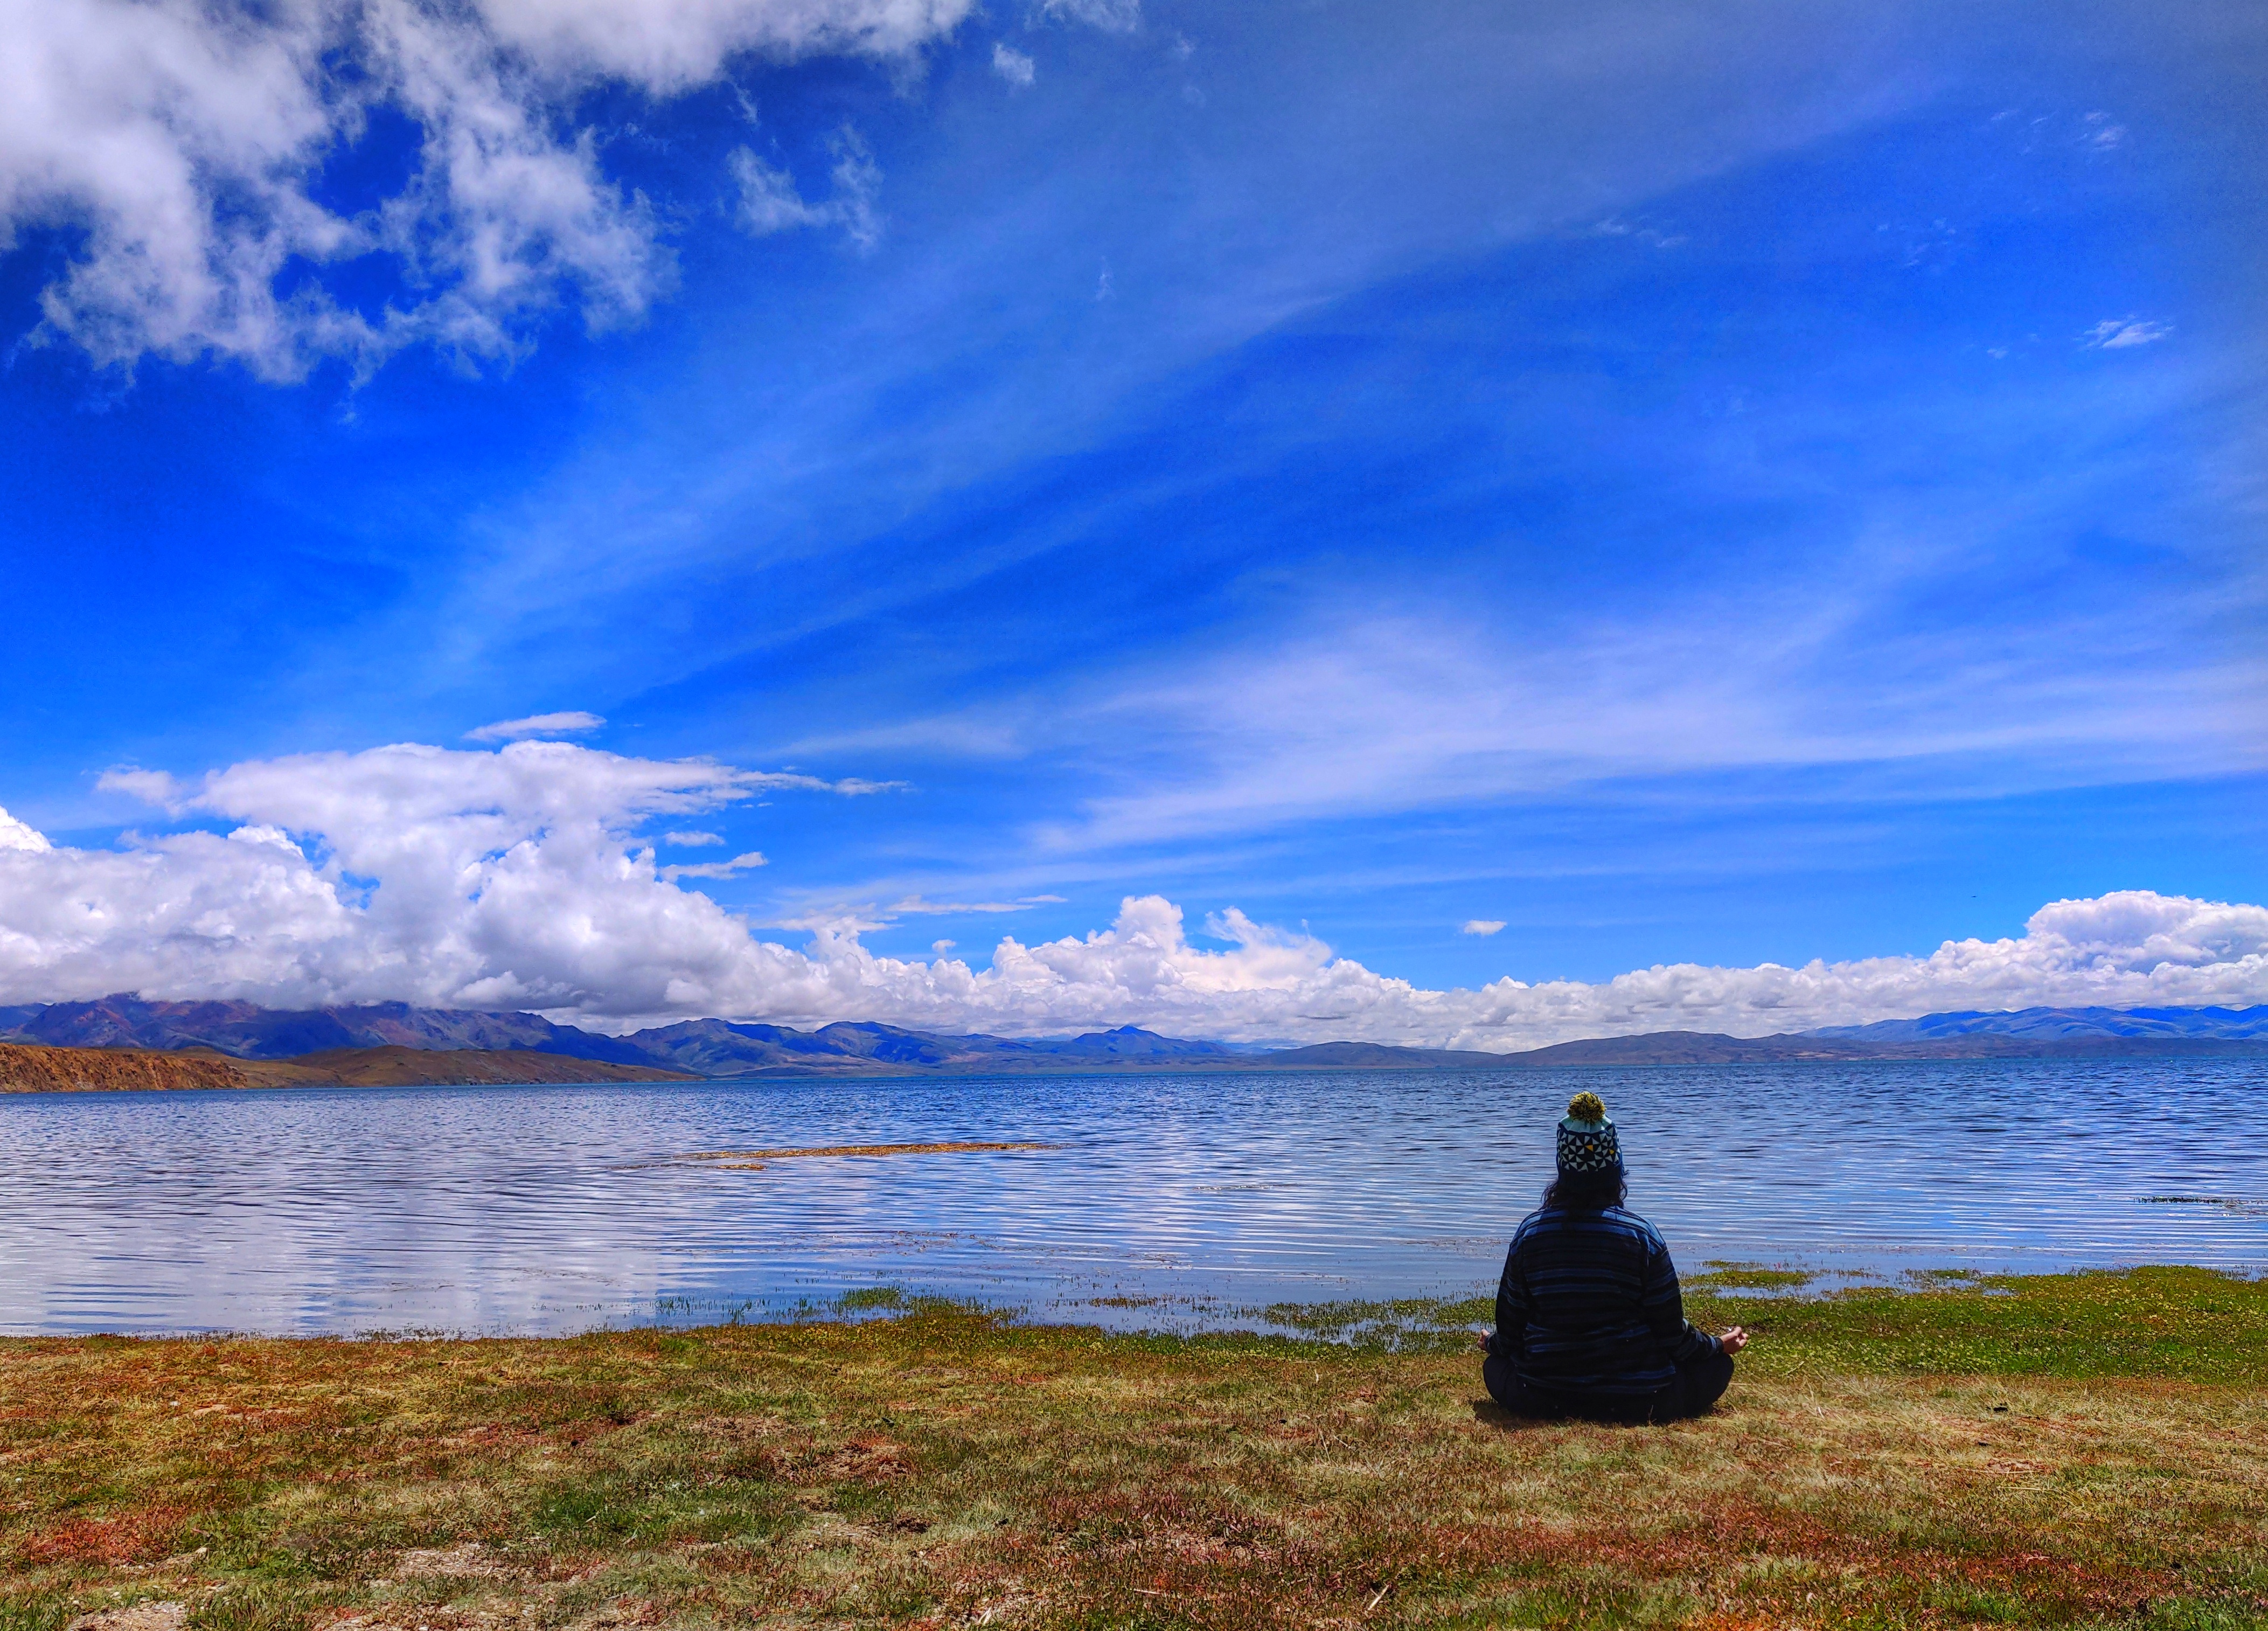 I am sitting by the side of Lake Mansarovar during Kailash Mansarovar Yatra